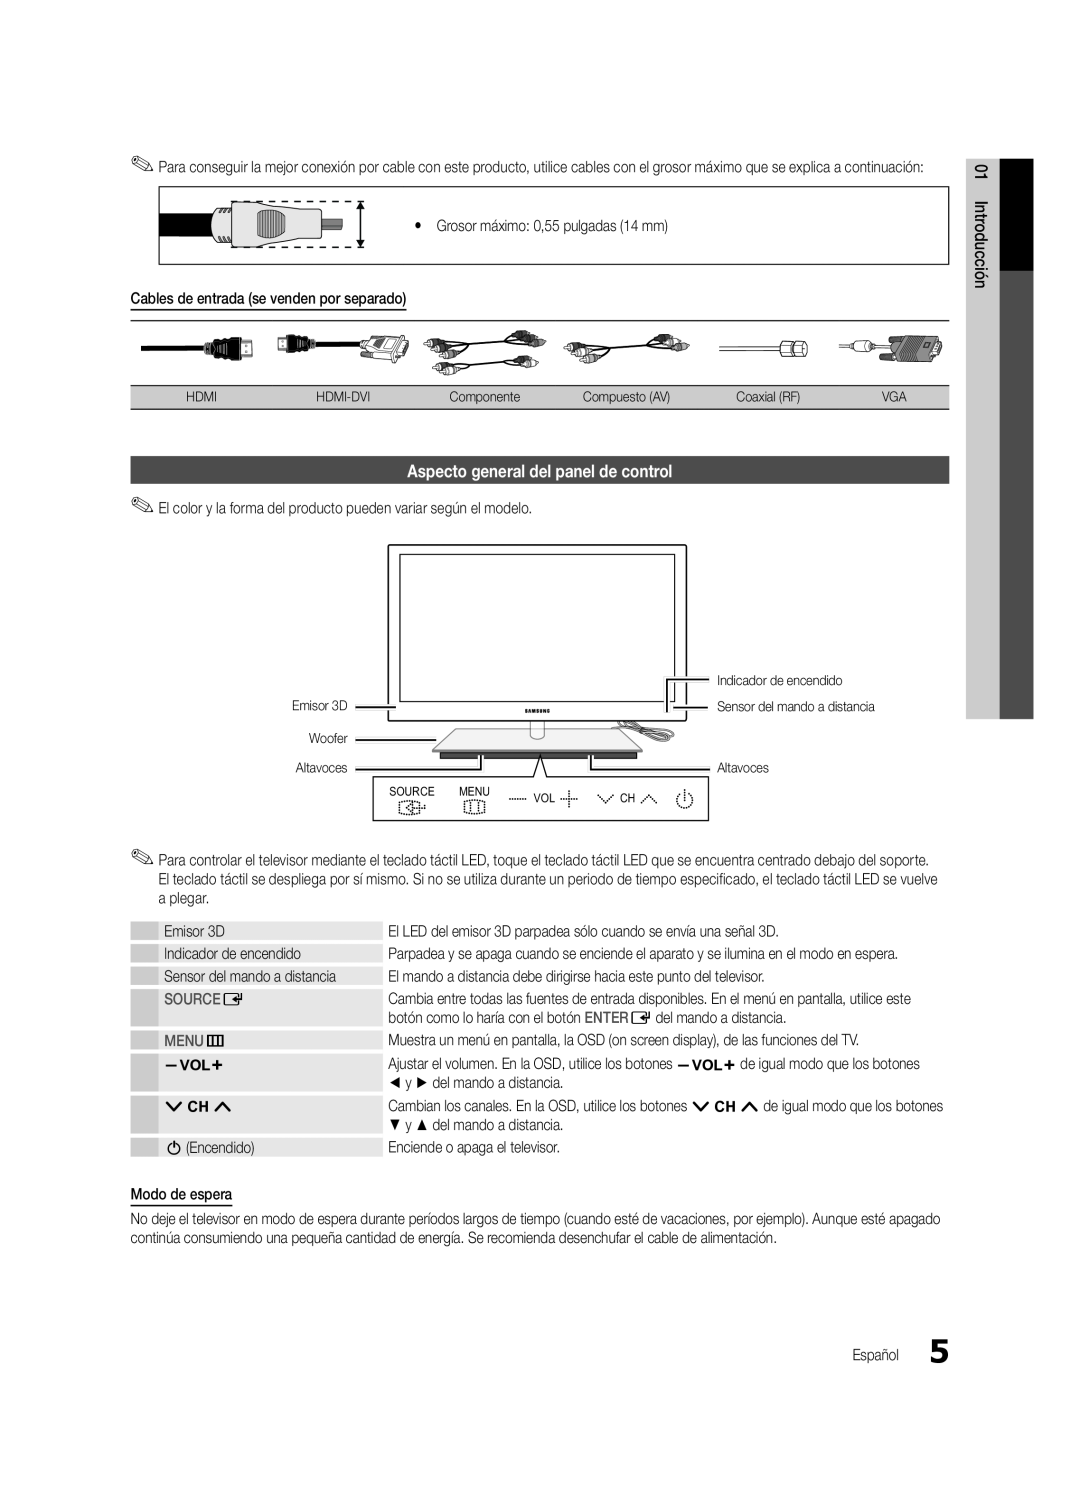 Samsung Series C9, BN68-03088A-01 user manual Aspecto general del panel de control, Source E, MENU m, Introducción 